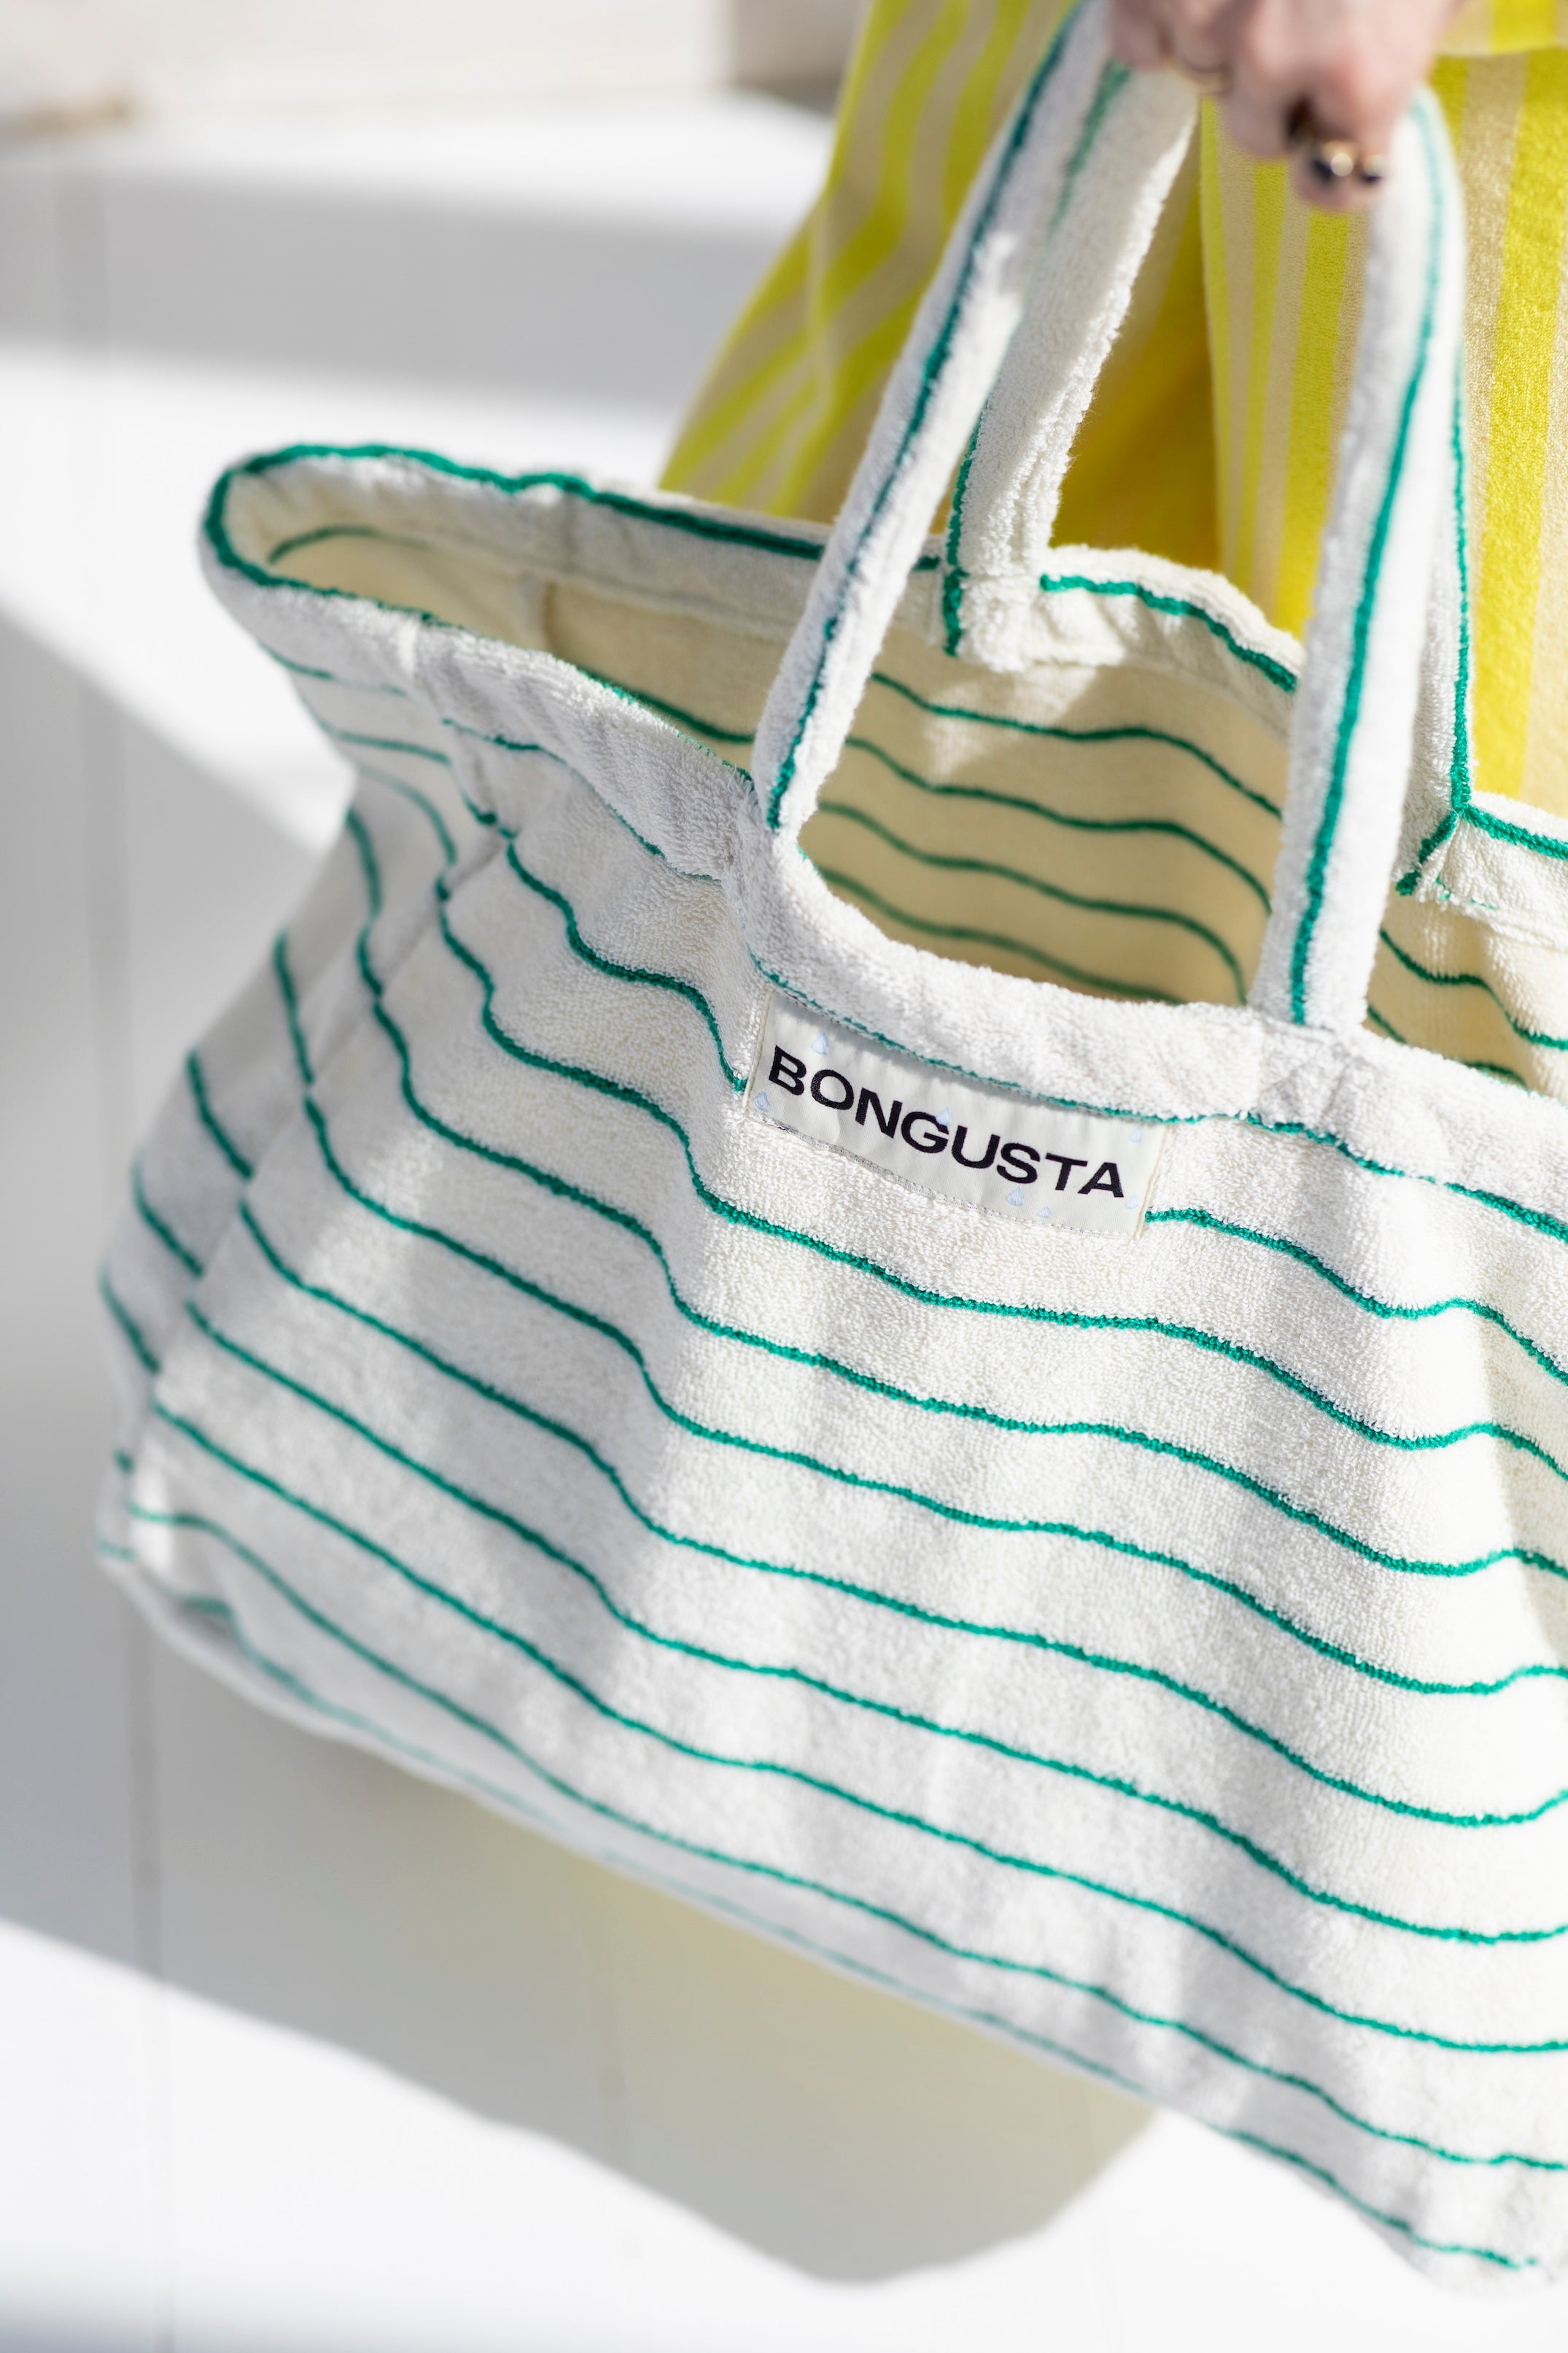 Bongusta, Product image, Naram Weekend Bag, pure white & grass, 2 of 5}